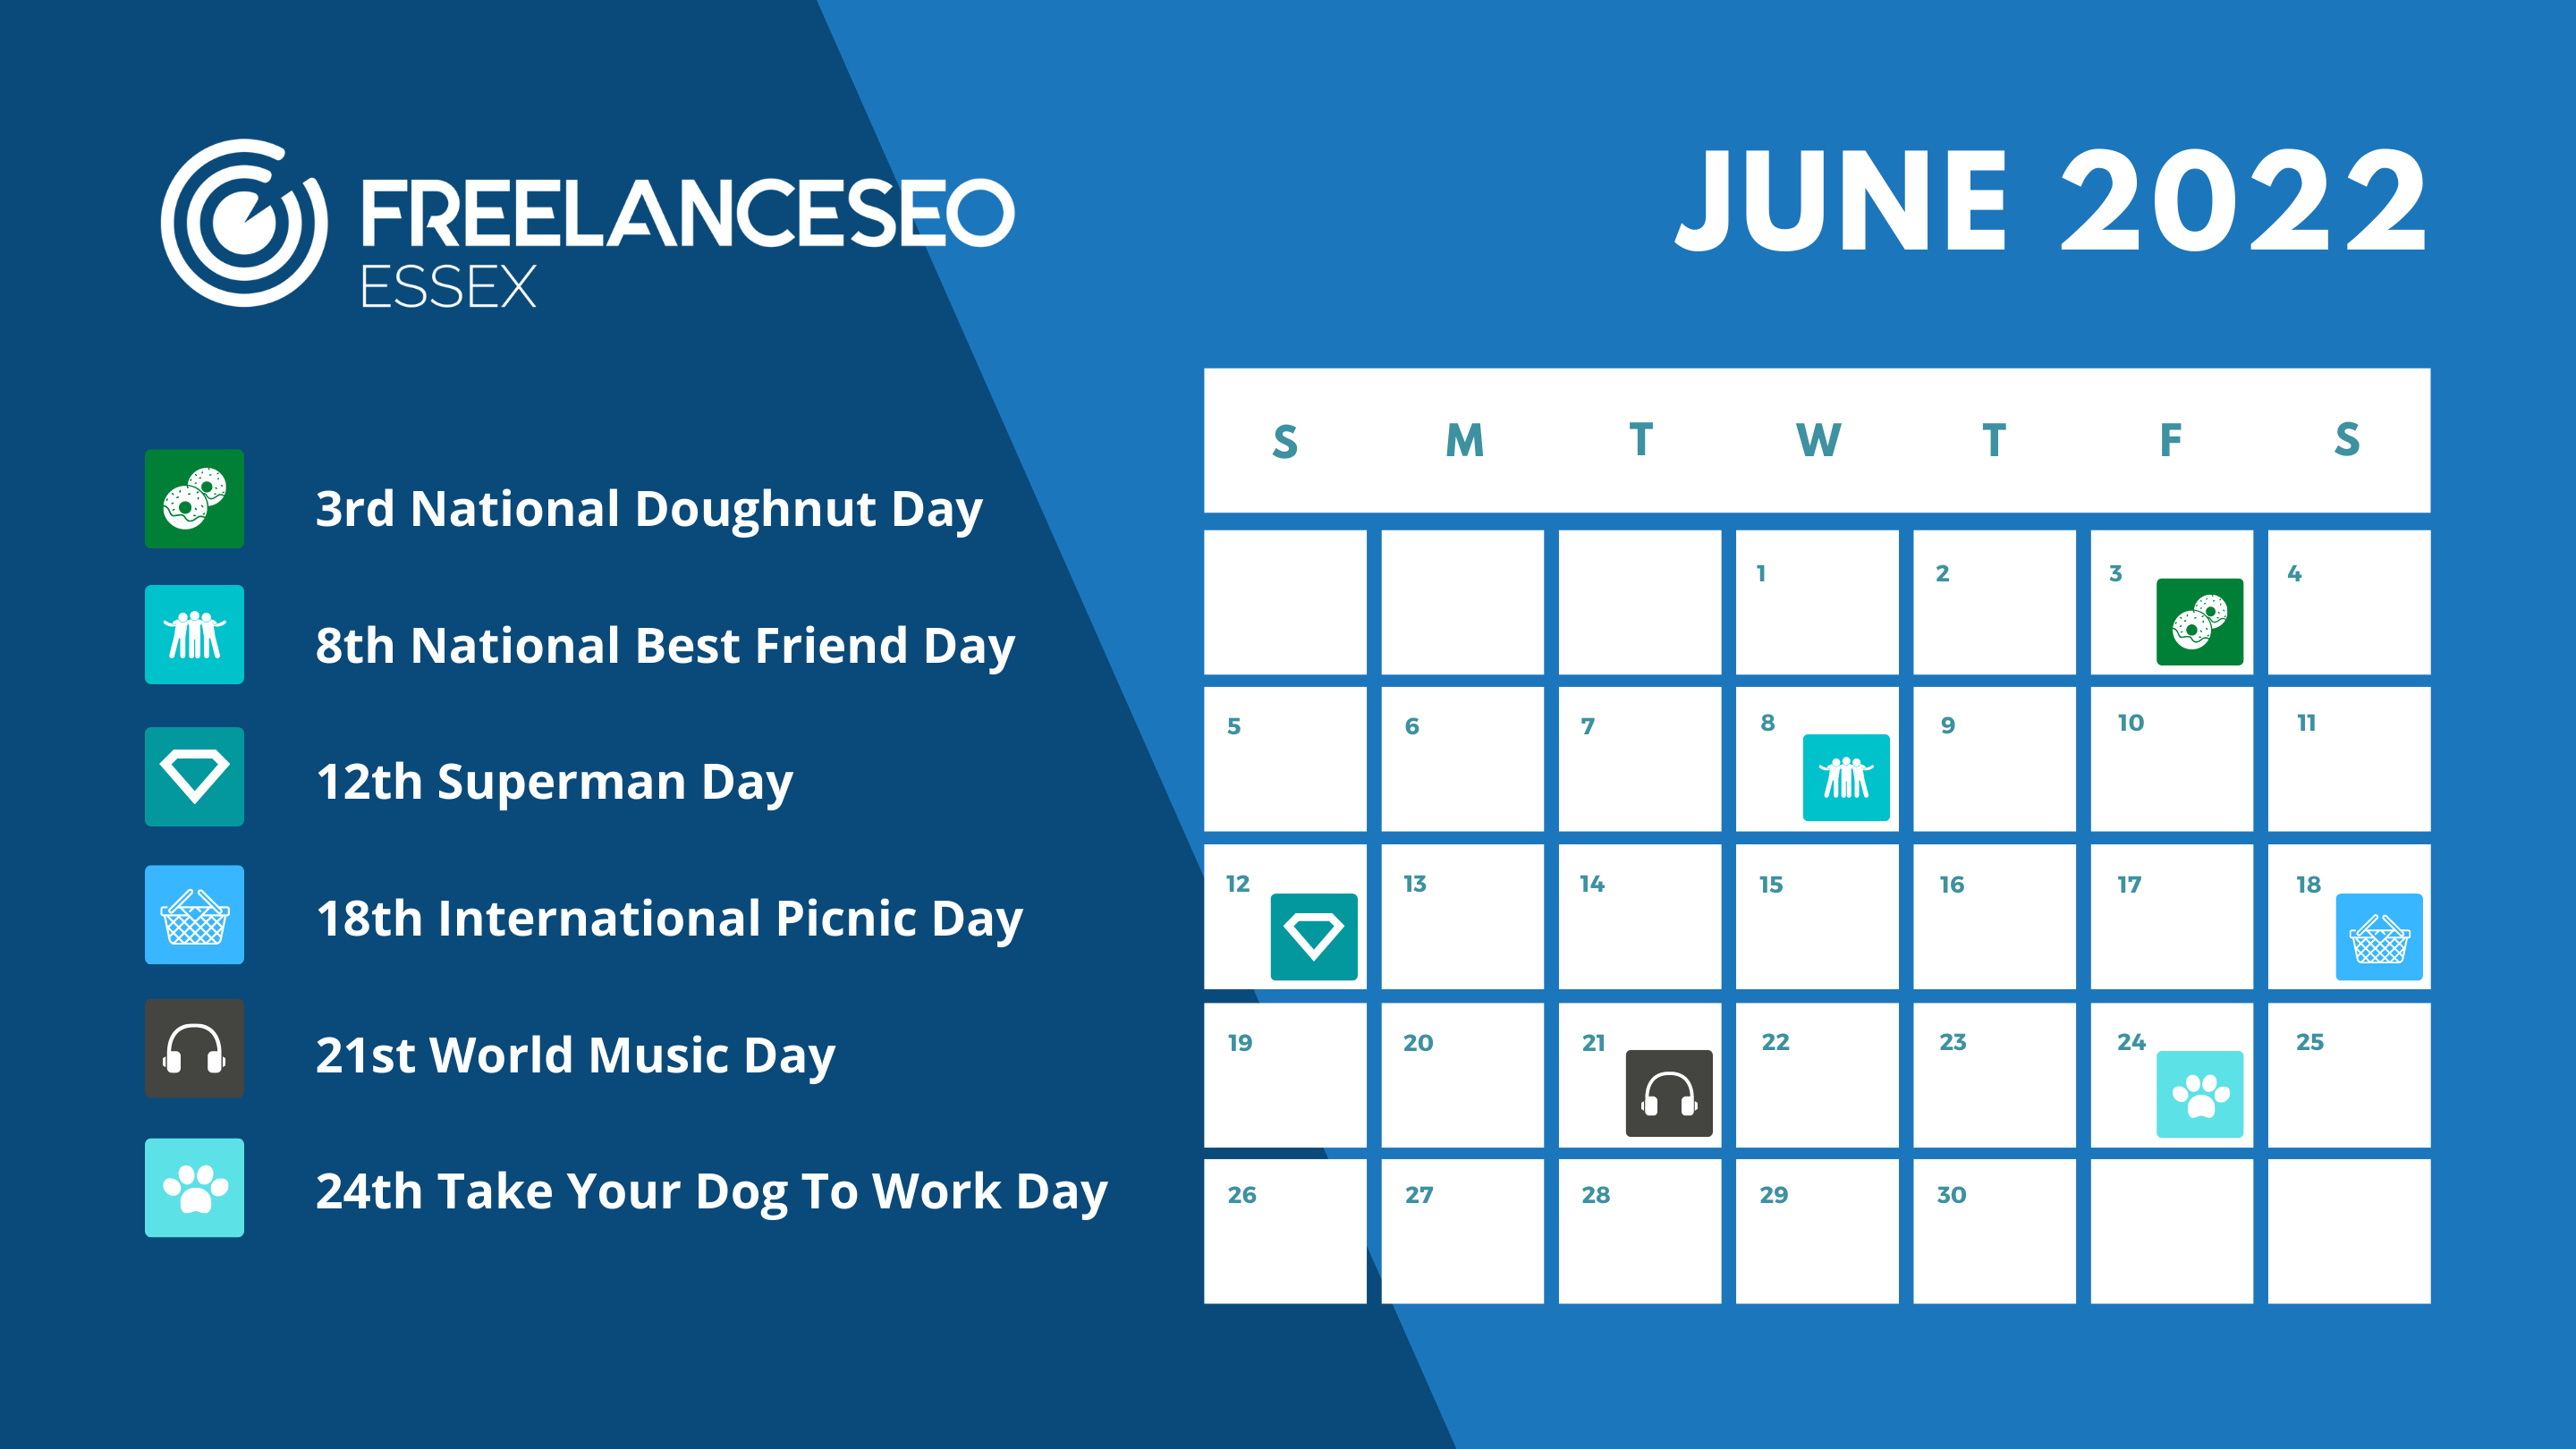 June 2022 Social calendar dates for your diary